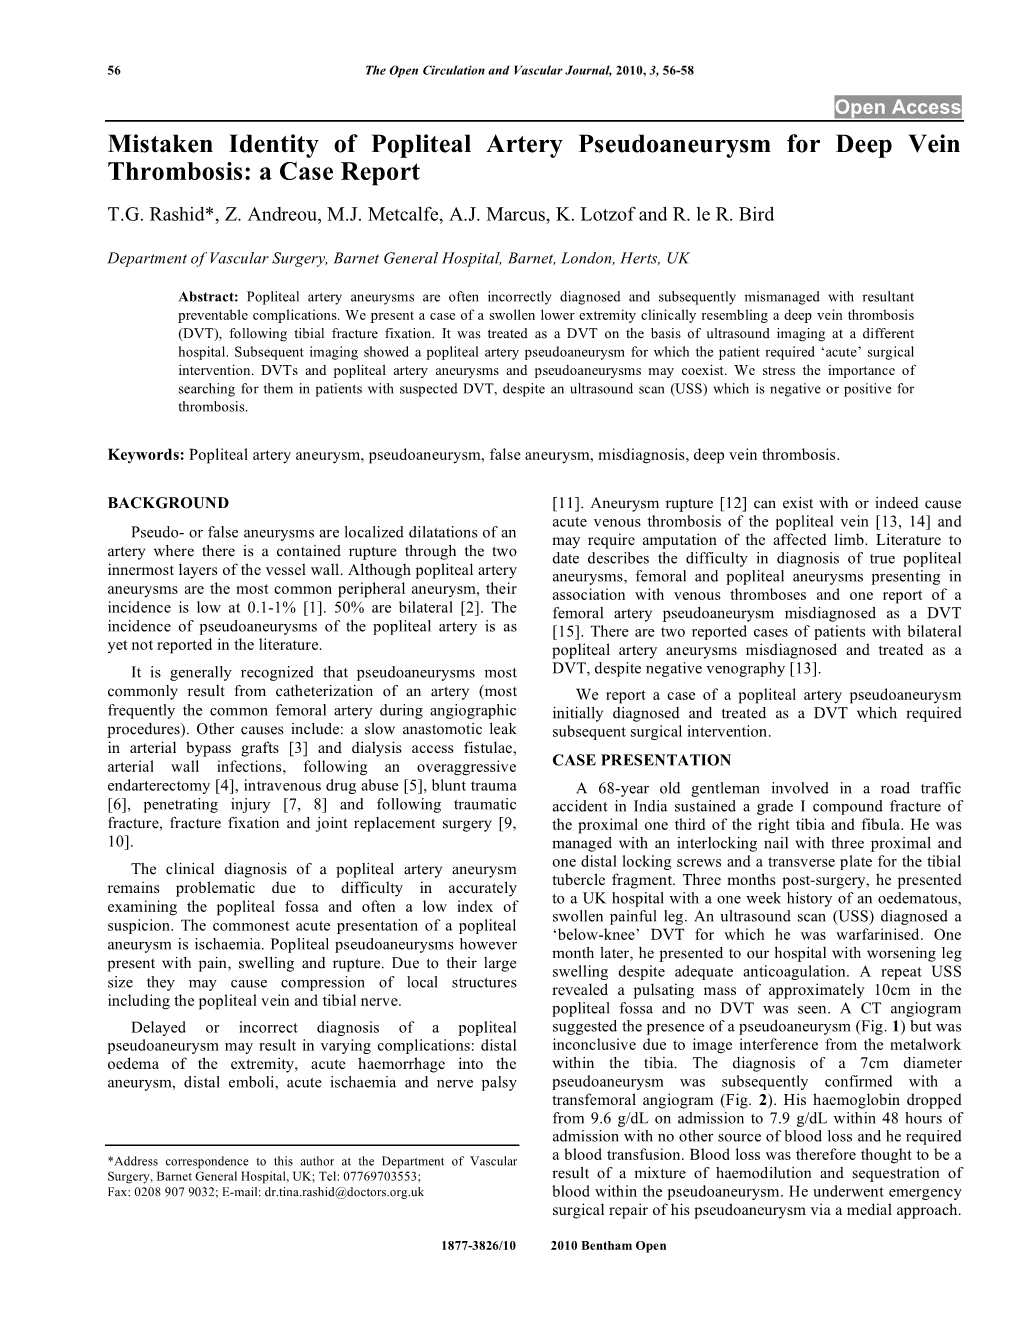 Mistaken Identity of Popliteal Artery Pseudoaneurysm for Deep Vein Thrombosis: a Case Report T.G